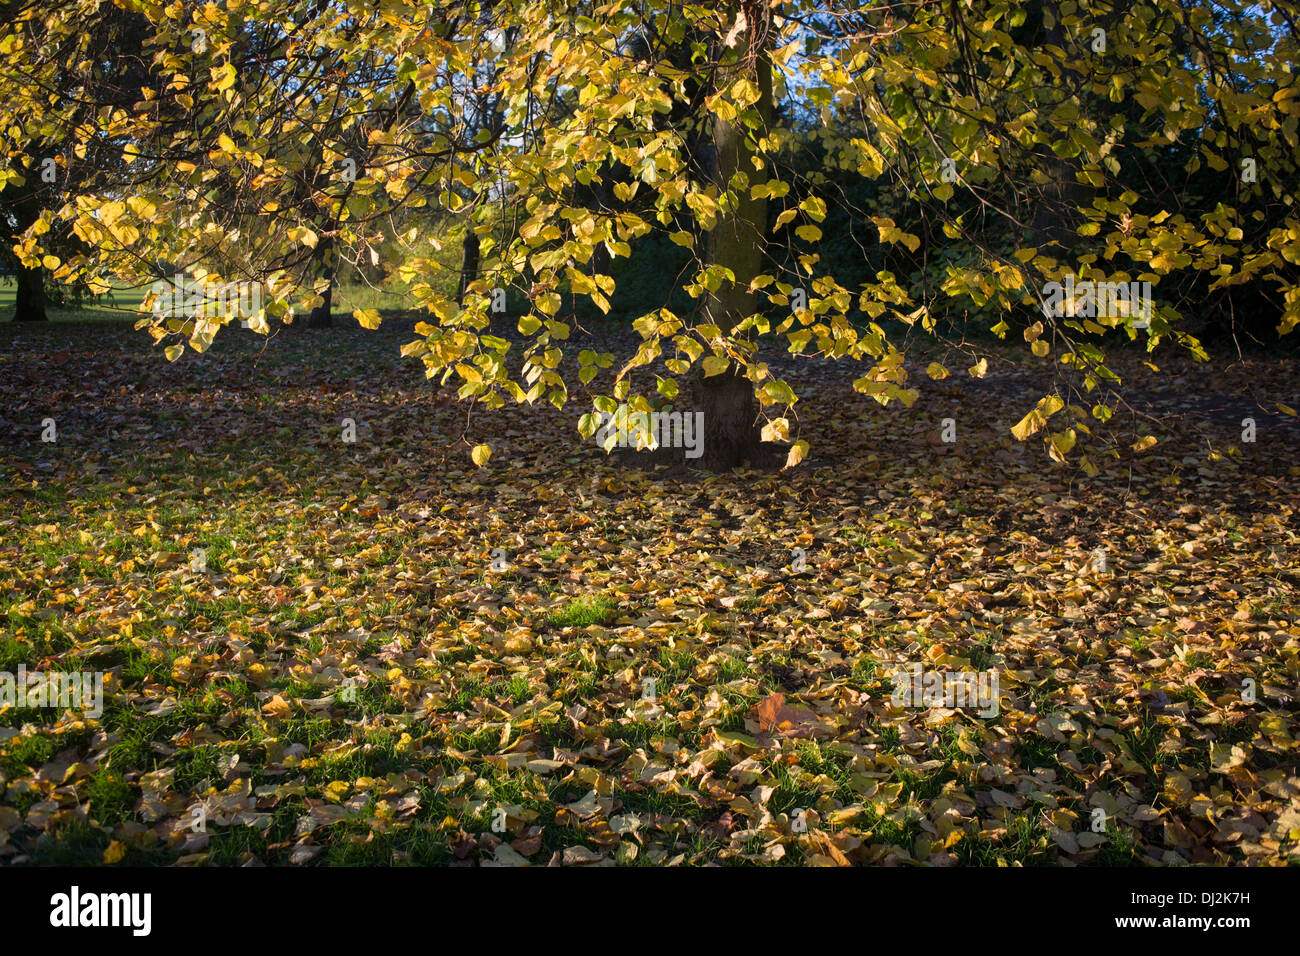 Fallen yellow autumn leaves in Dulwich Park, London borough of Southwark. Stock Photo